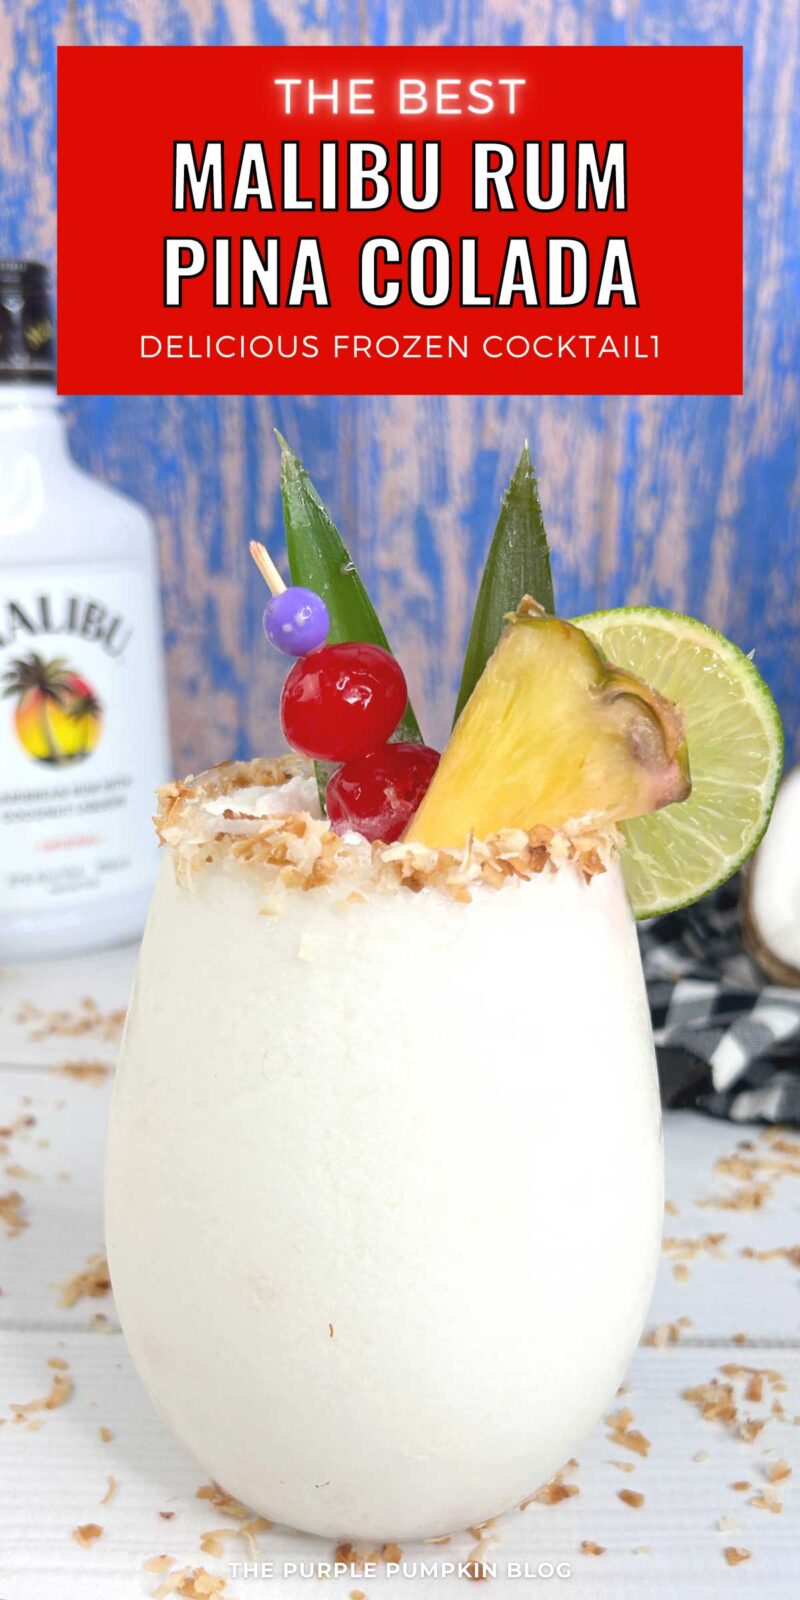 The Best Malibu Rum Pina Colada - Delicious Frozen Cocktail!